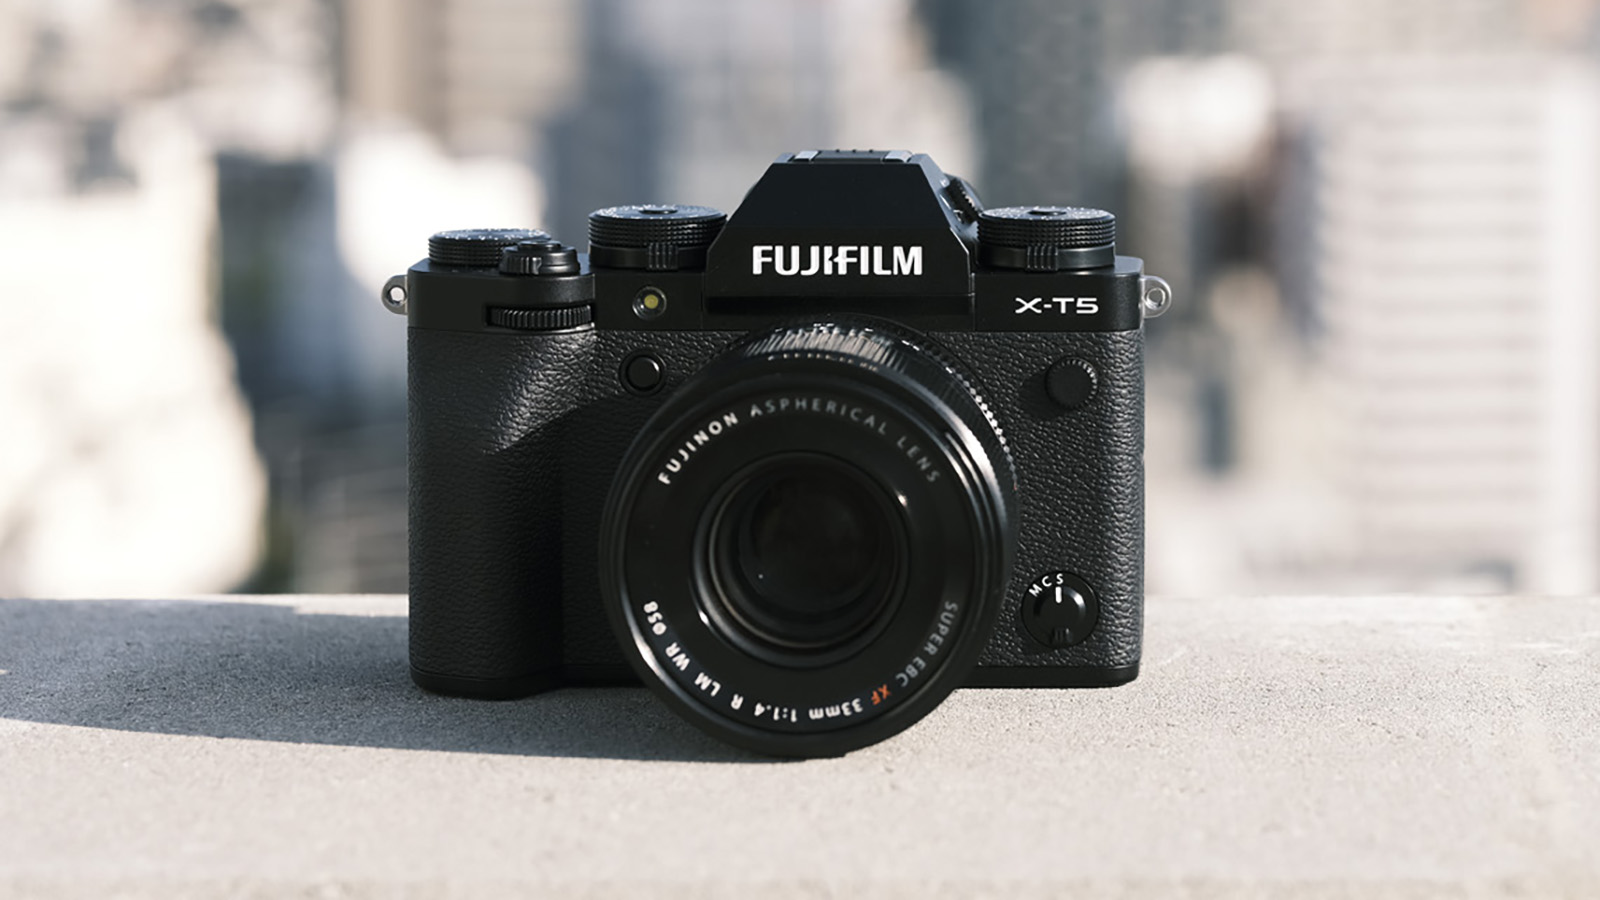 The Fujifilm X-T5 camera sitting on a wall